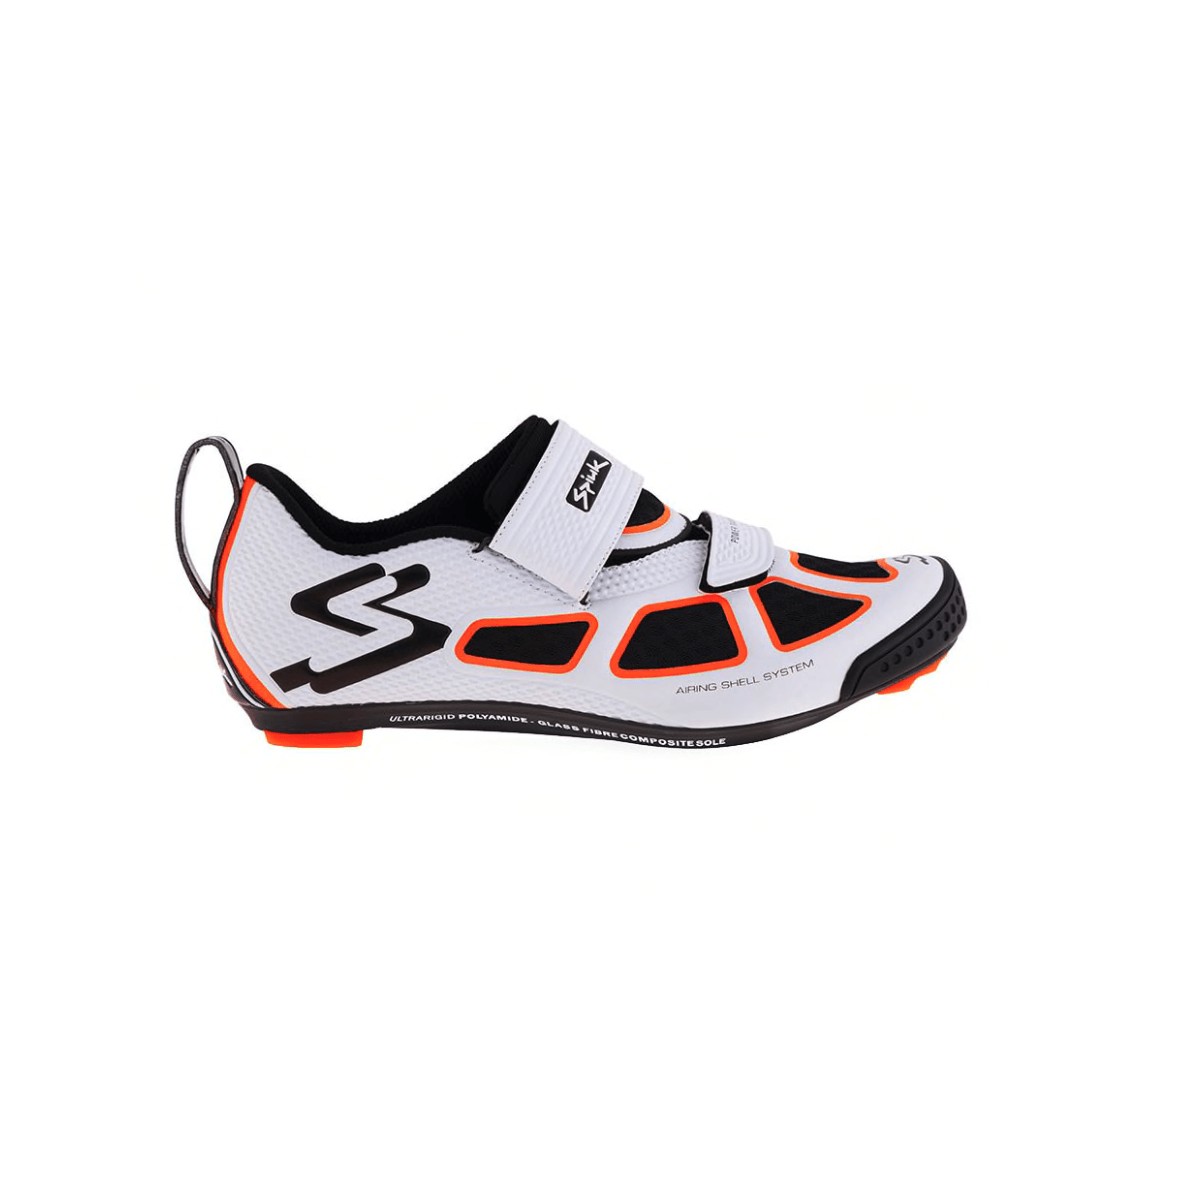 Spiuk Trivium White Orange man shoes, Size 48 - EUR